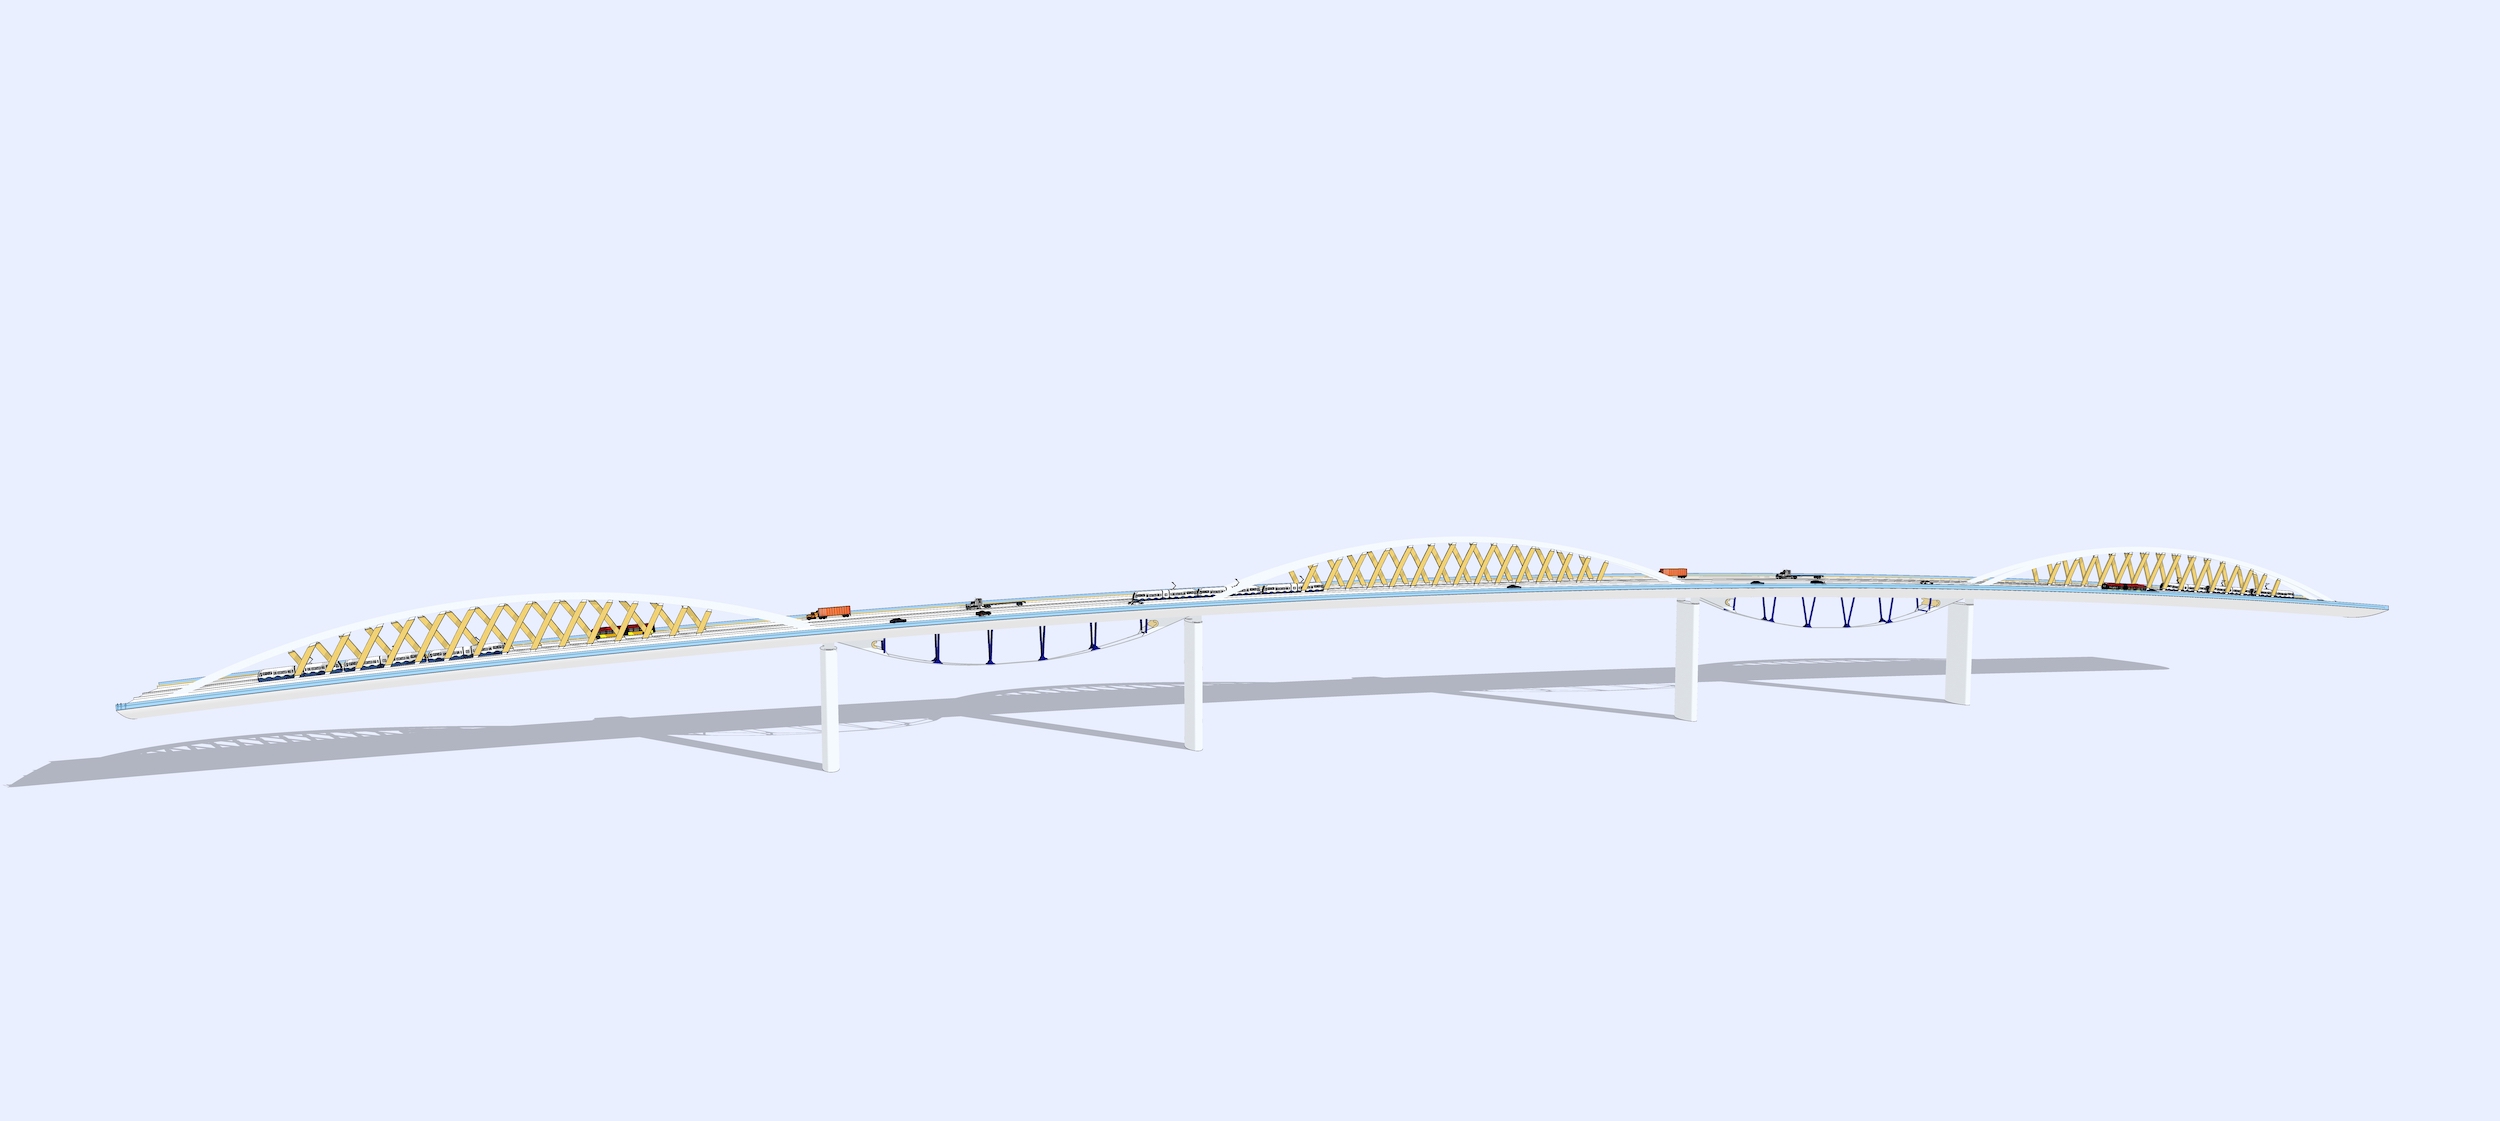 illustration of a proposed bridge